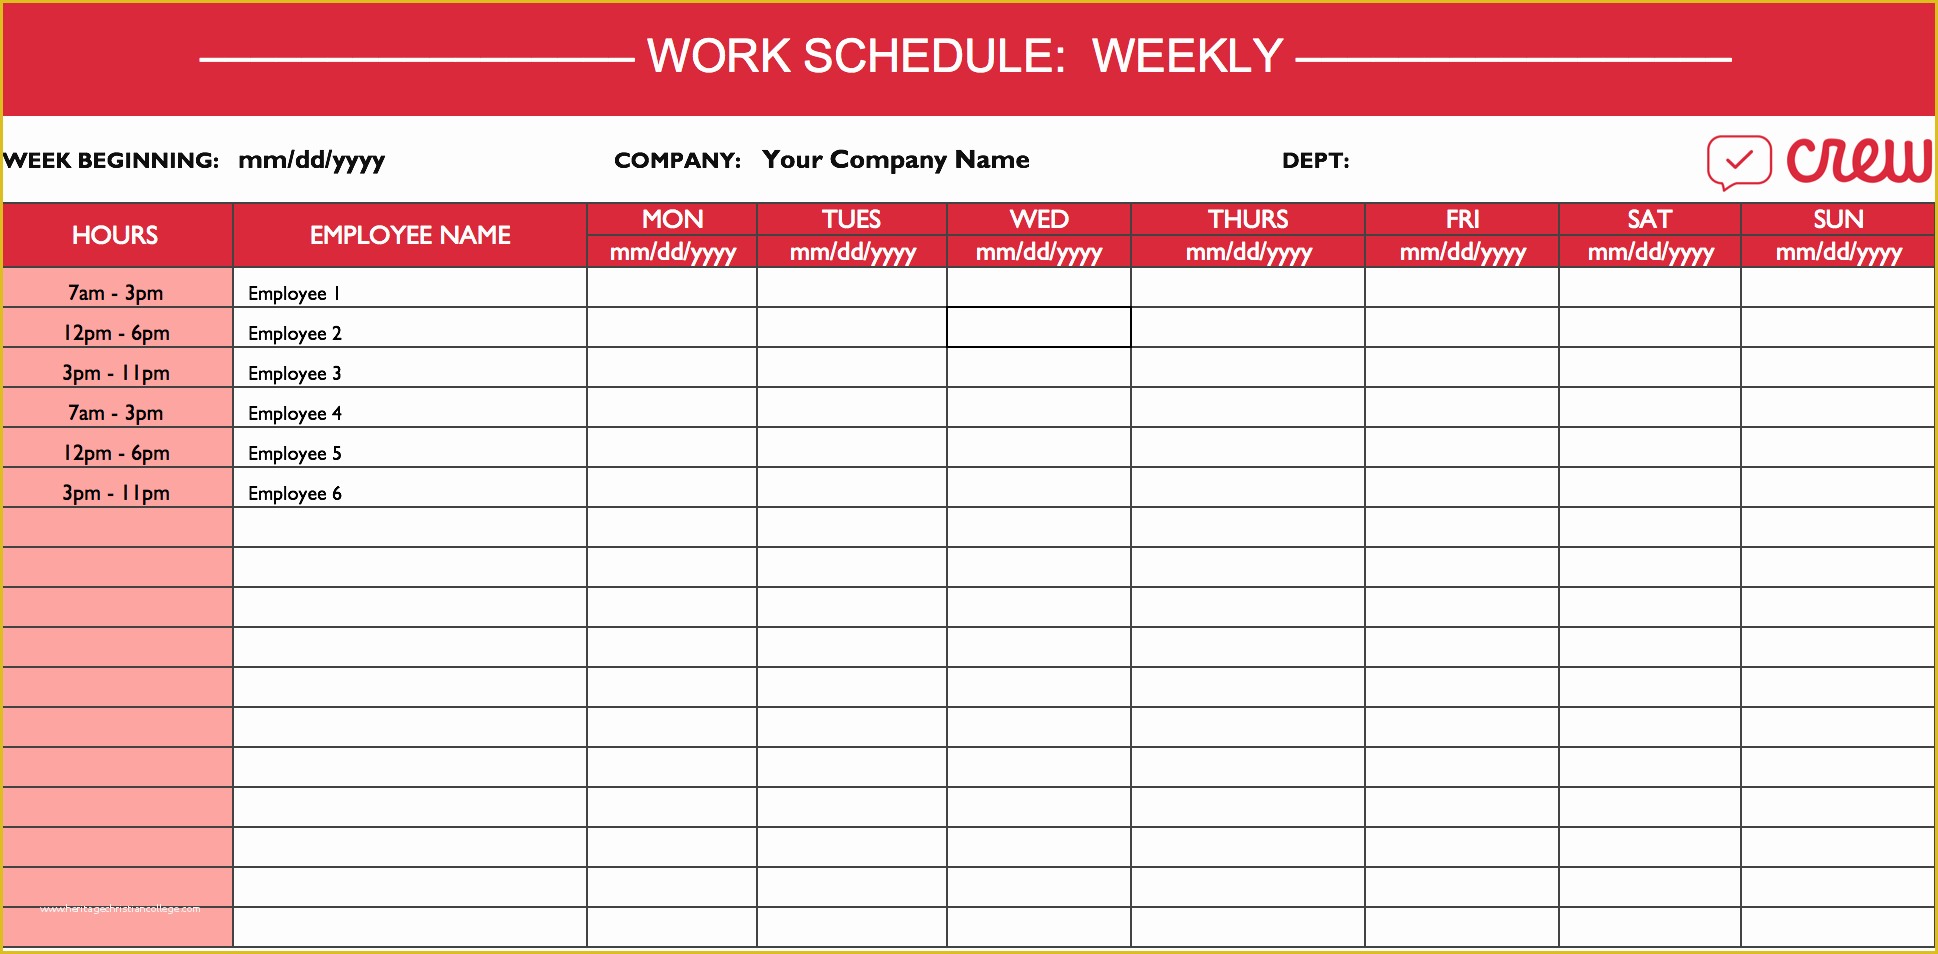 Monthly Employee Schedule Template Free Of Weekly Work Schedule Template I Crew